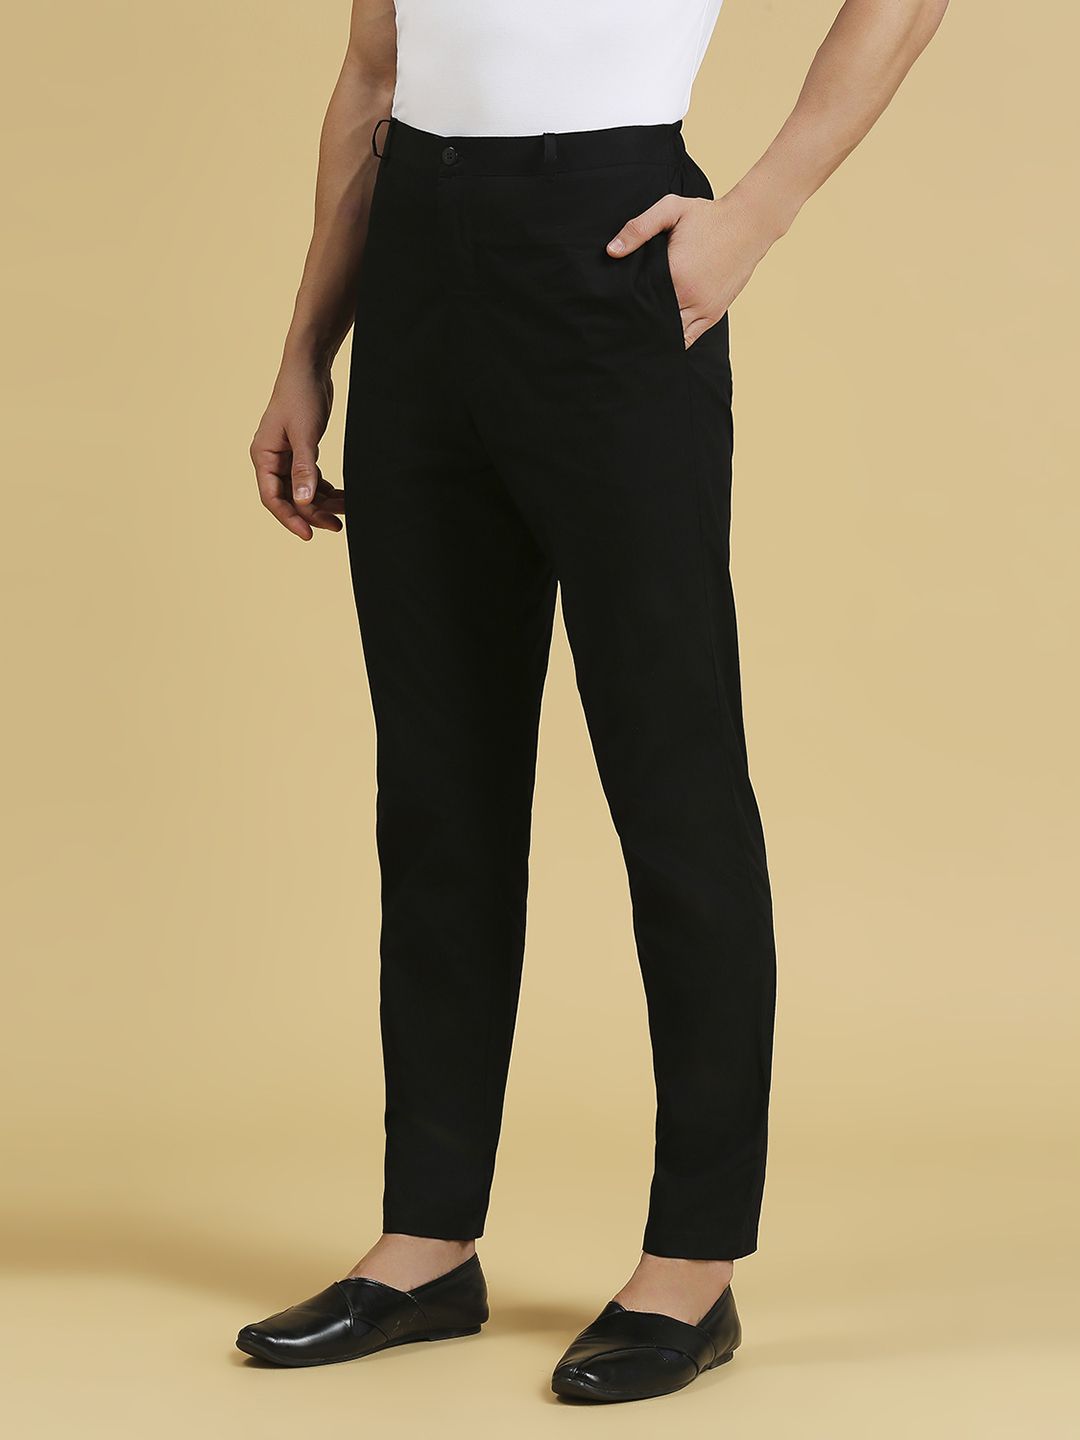 Latest Trousers Designs | Womens pants design, Women trousers design, Pants  women fashion